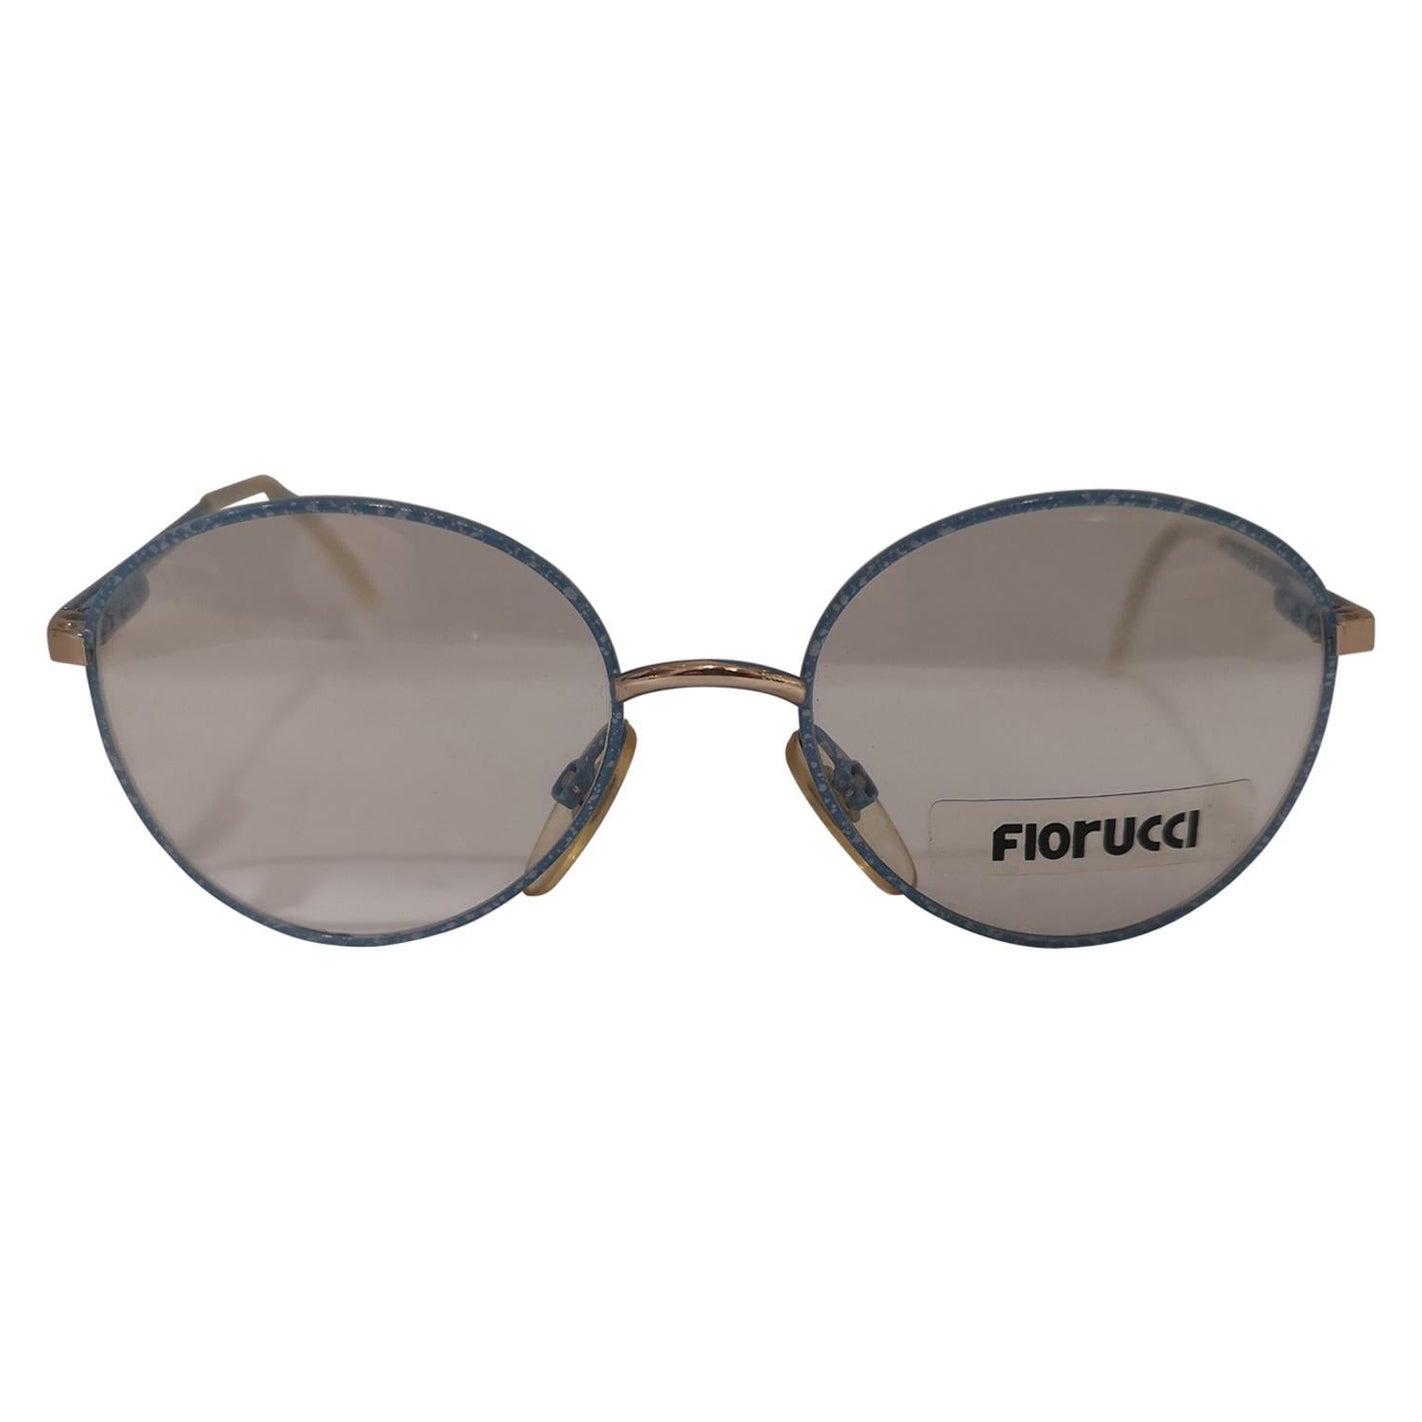 Fiorucci light blue frames glasses NWOT